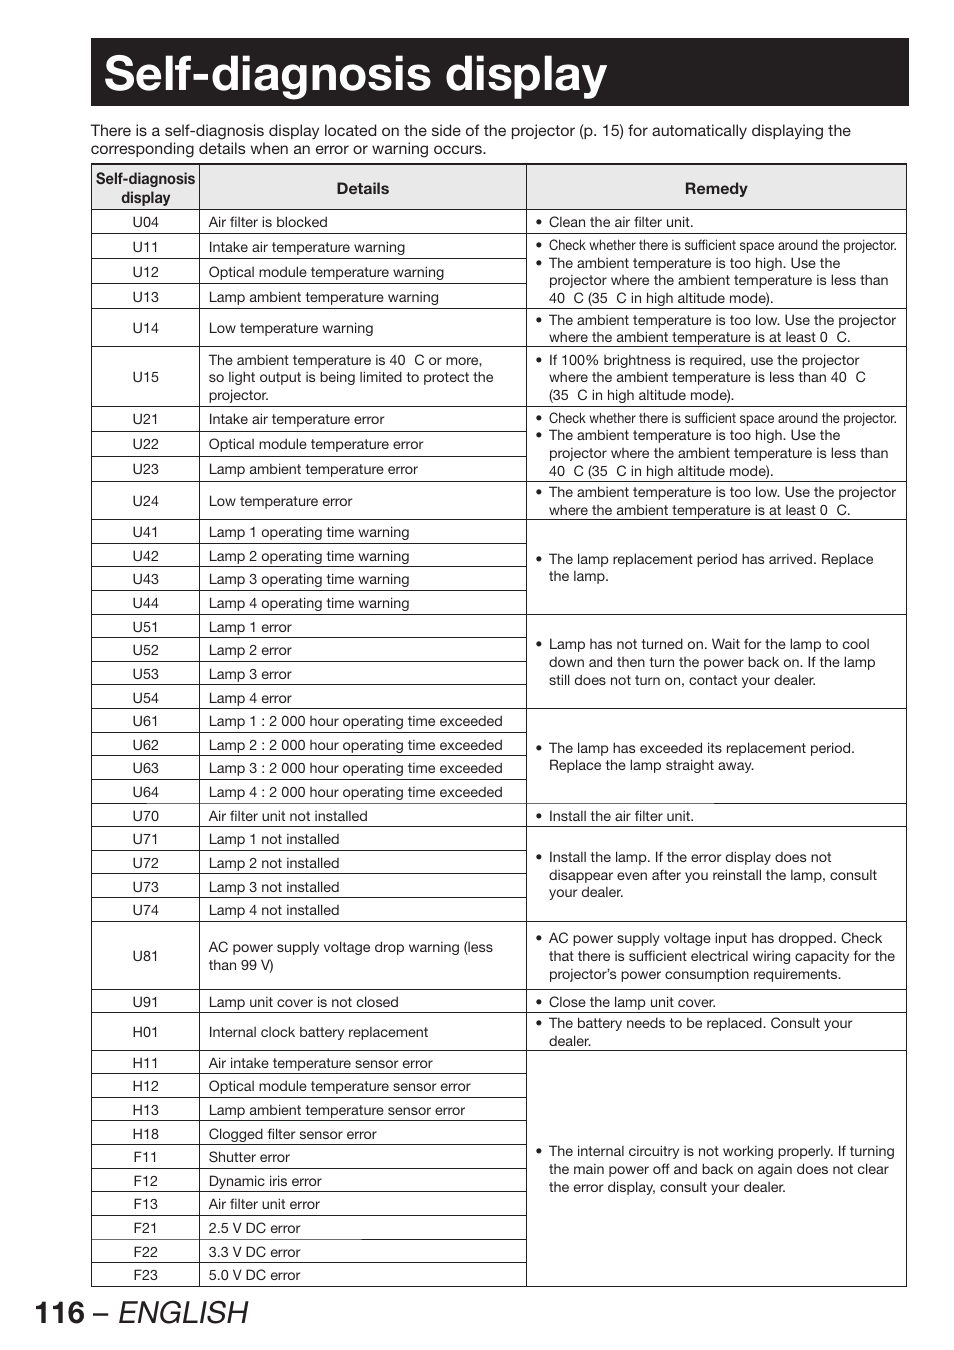 Self-diagnosis display, 116 – english | Panasonic PT-DW100U Manuel d'utilisation | Page 116 / 136